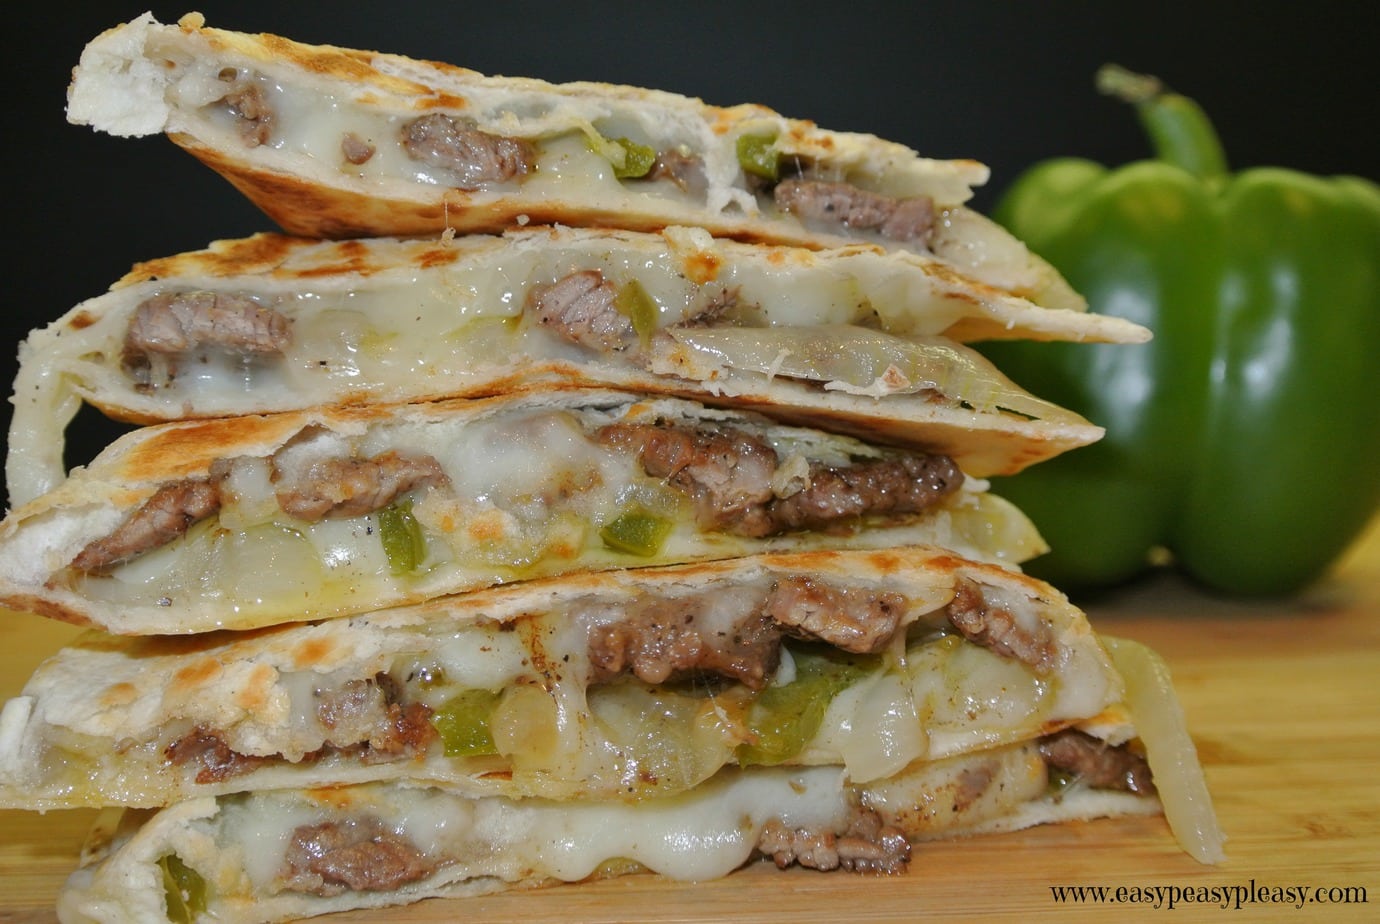 Cheese Steak Quesadillas are a great twist on a classic Quesadilla